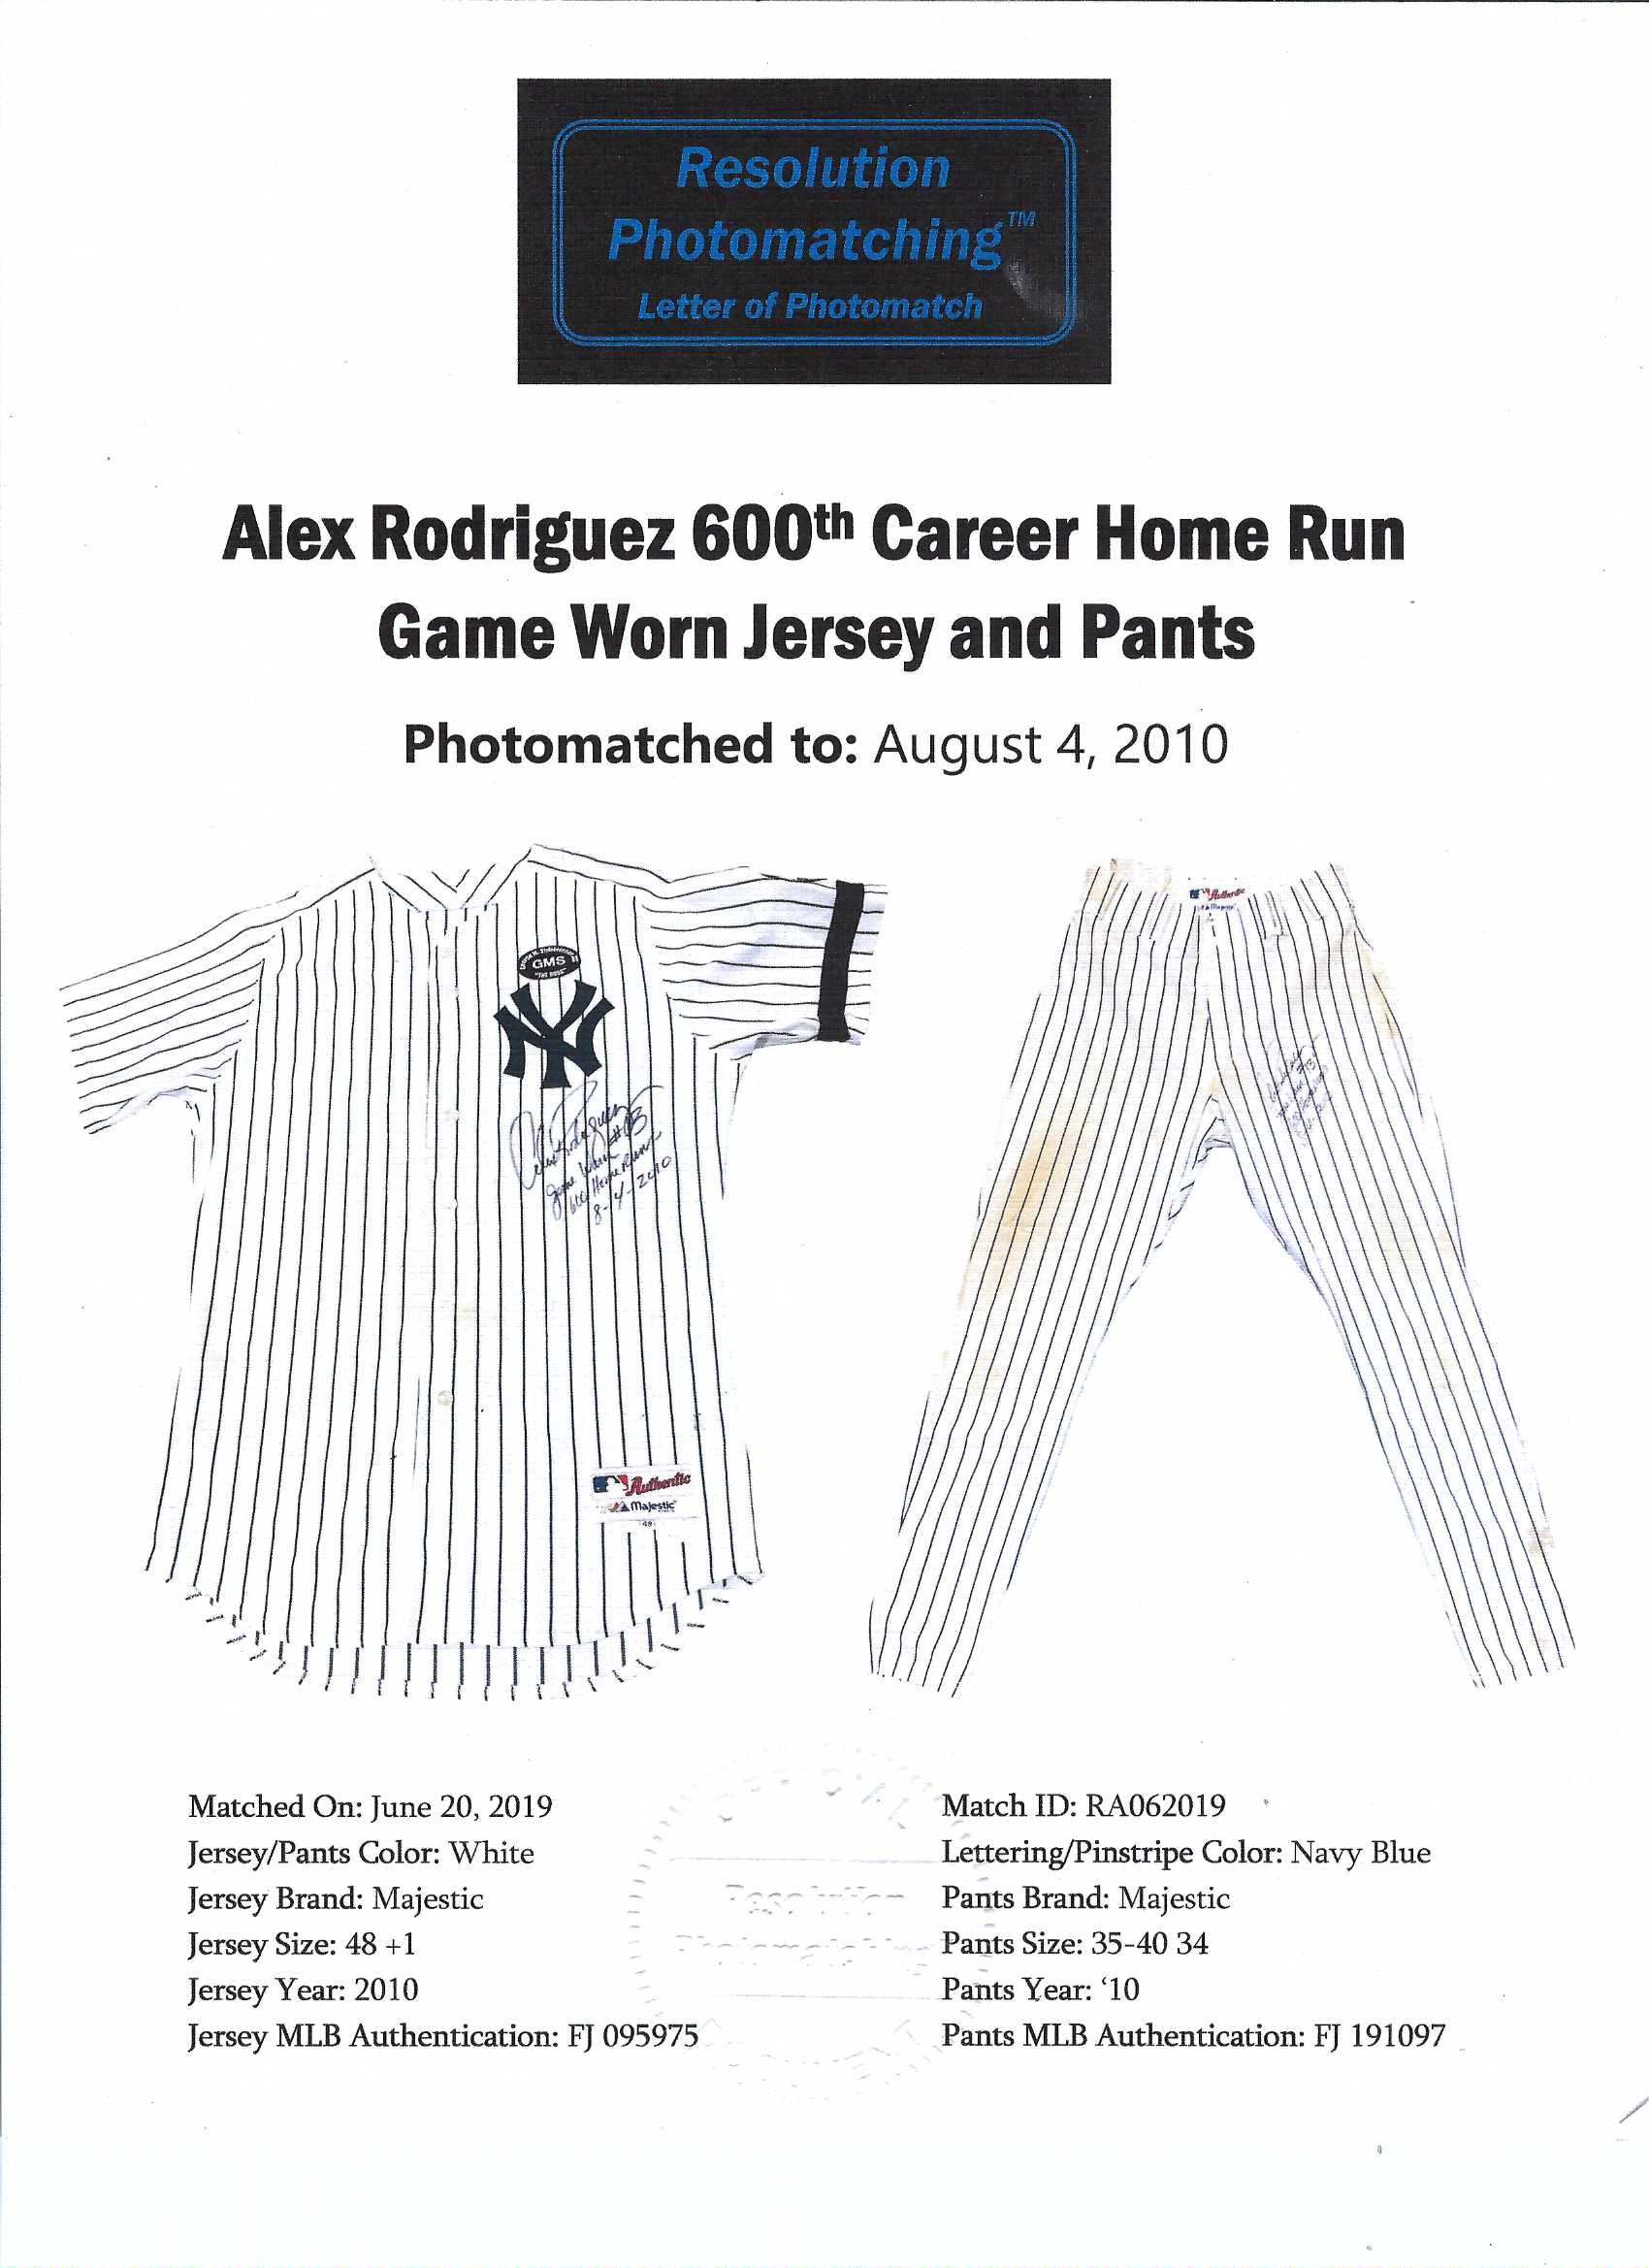 Majestic Yankees Pinstripe Team Issued Pants